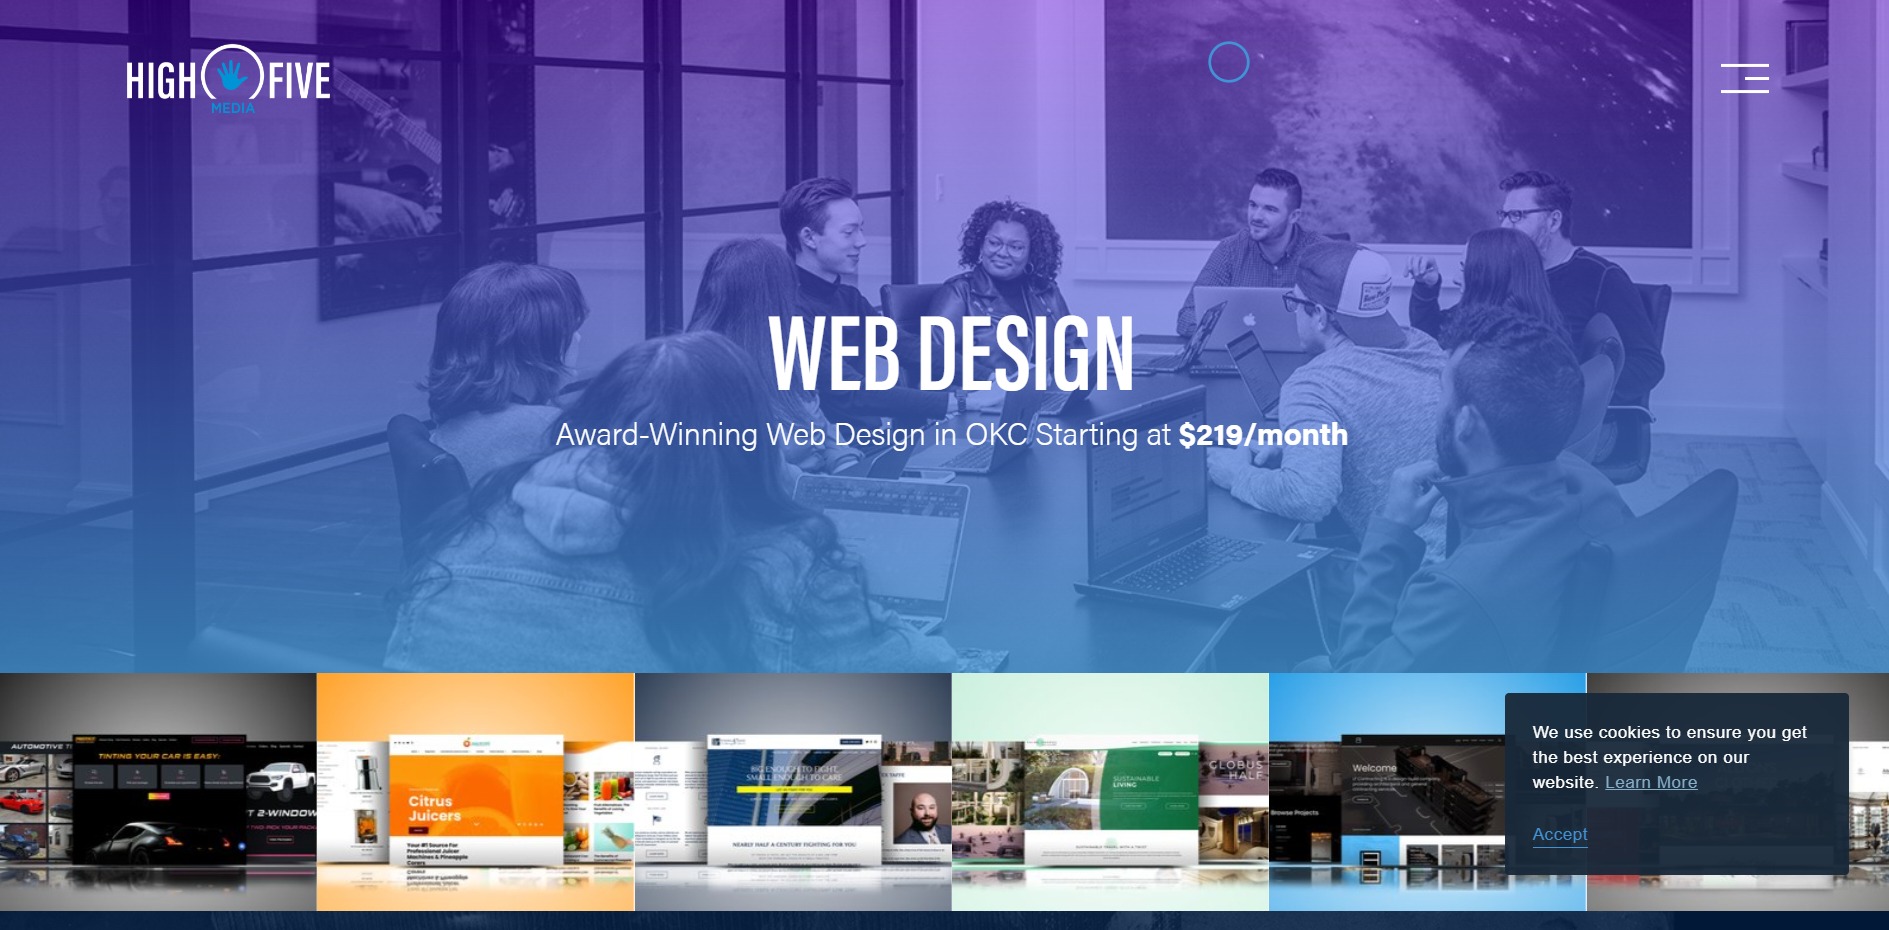 High five's web design